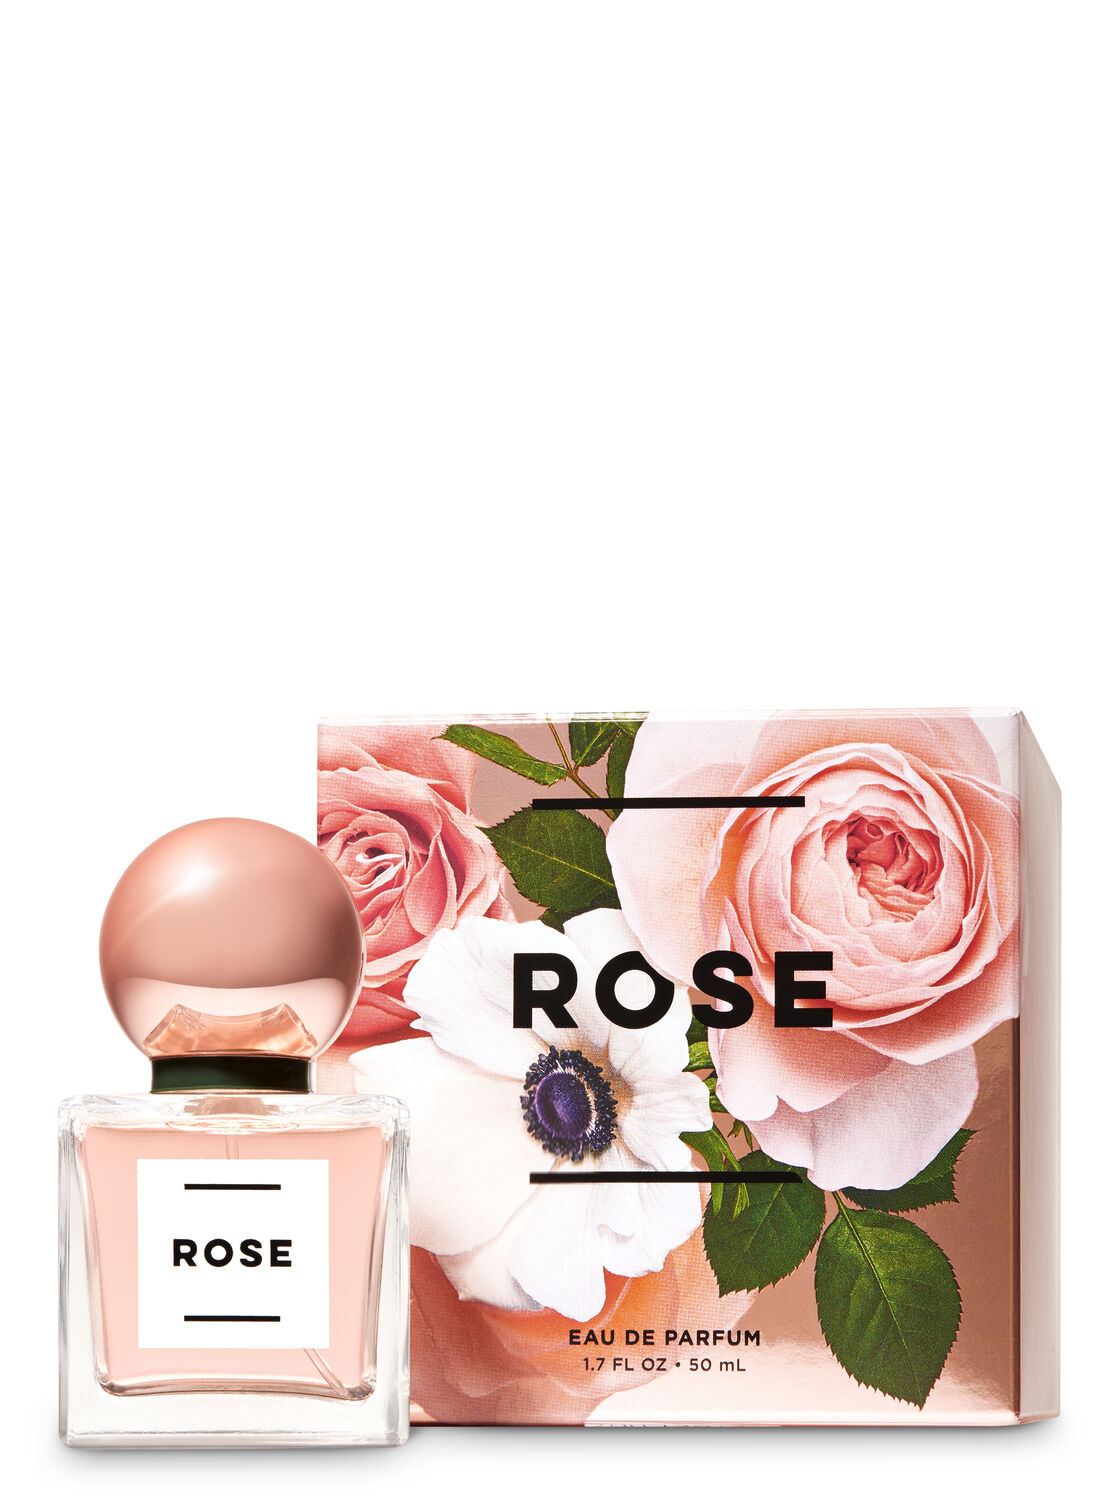 Rose Eau de Parfum | Bath \u0026 Body Works